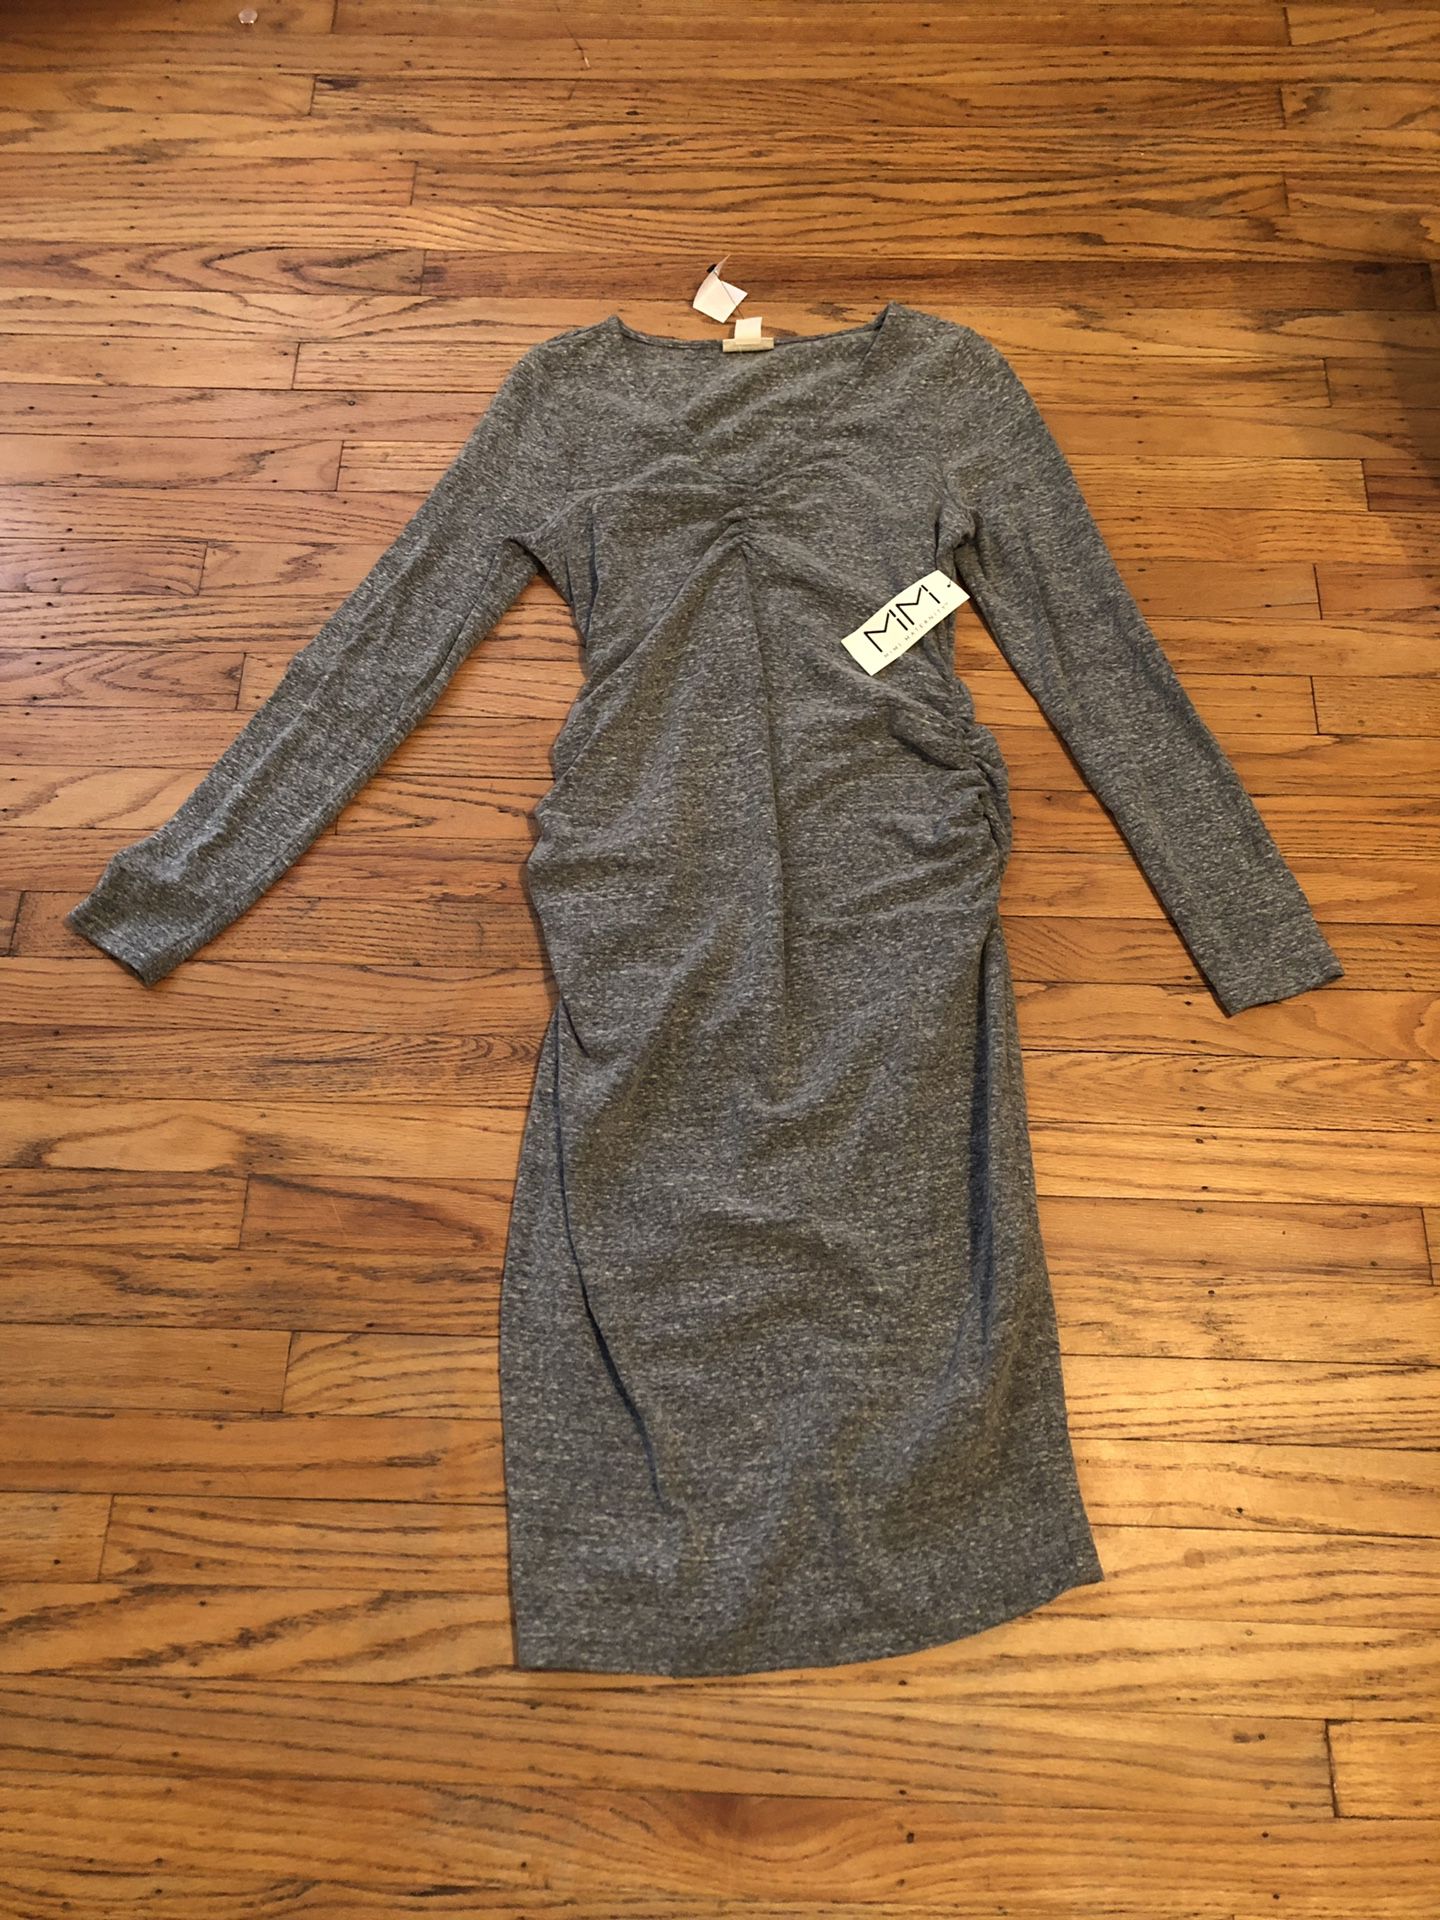 Brand new with tags Mimi maternity long sleeve gray sweater dress medium